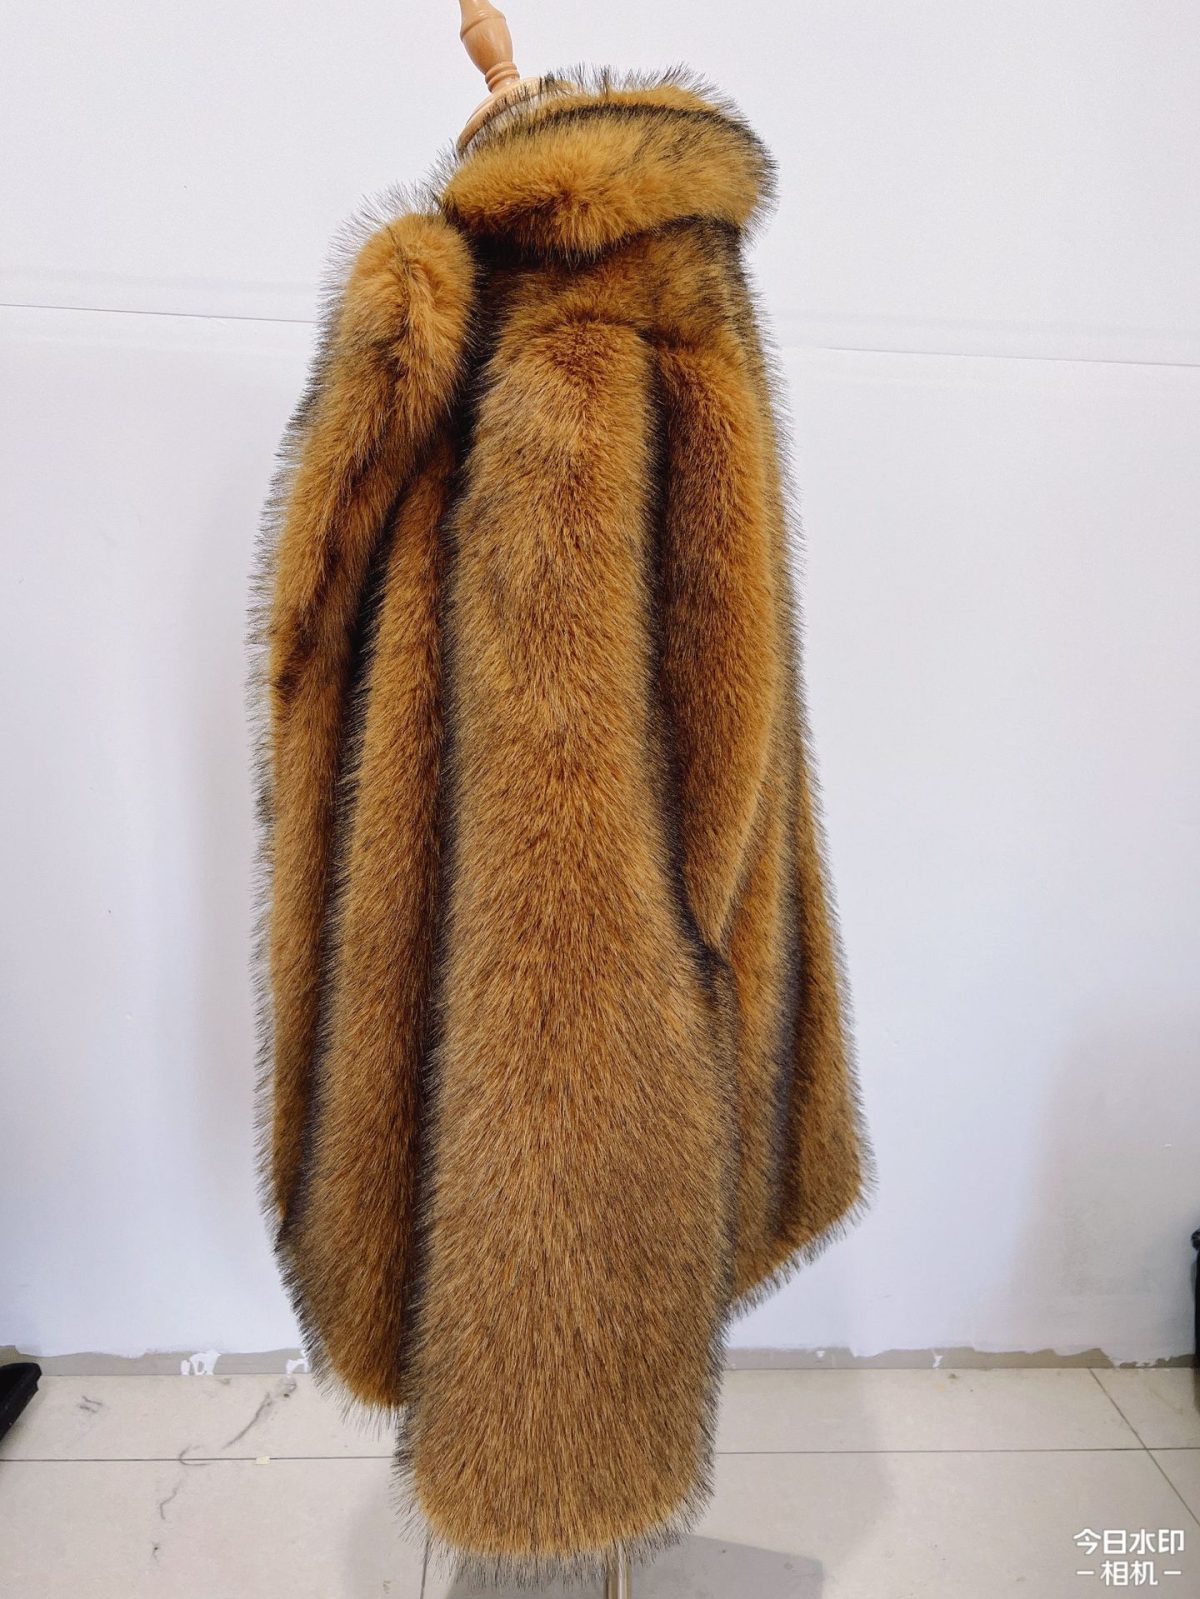 Popular Autumn Winter Faux Fur Mid Length Coat in Coats & Jackets